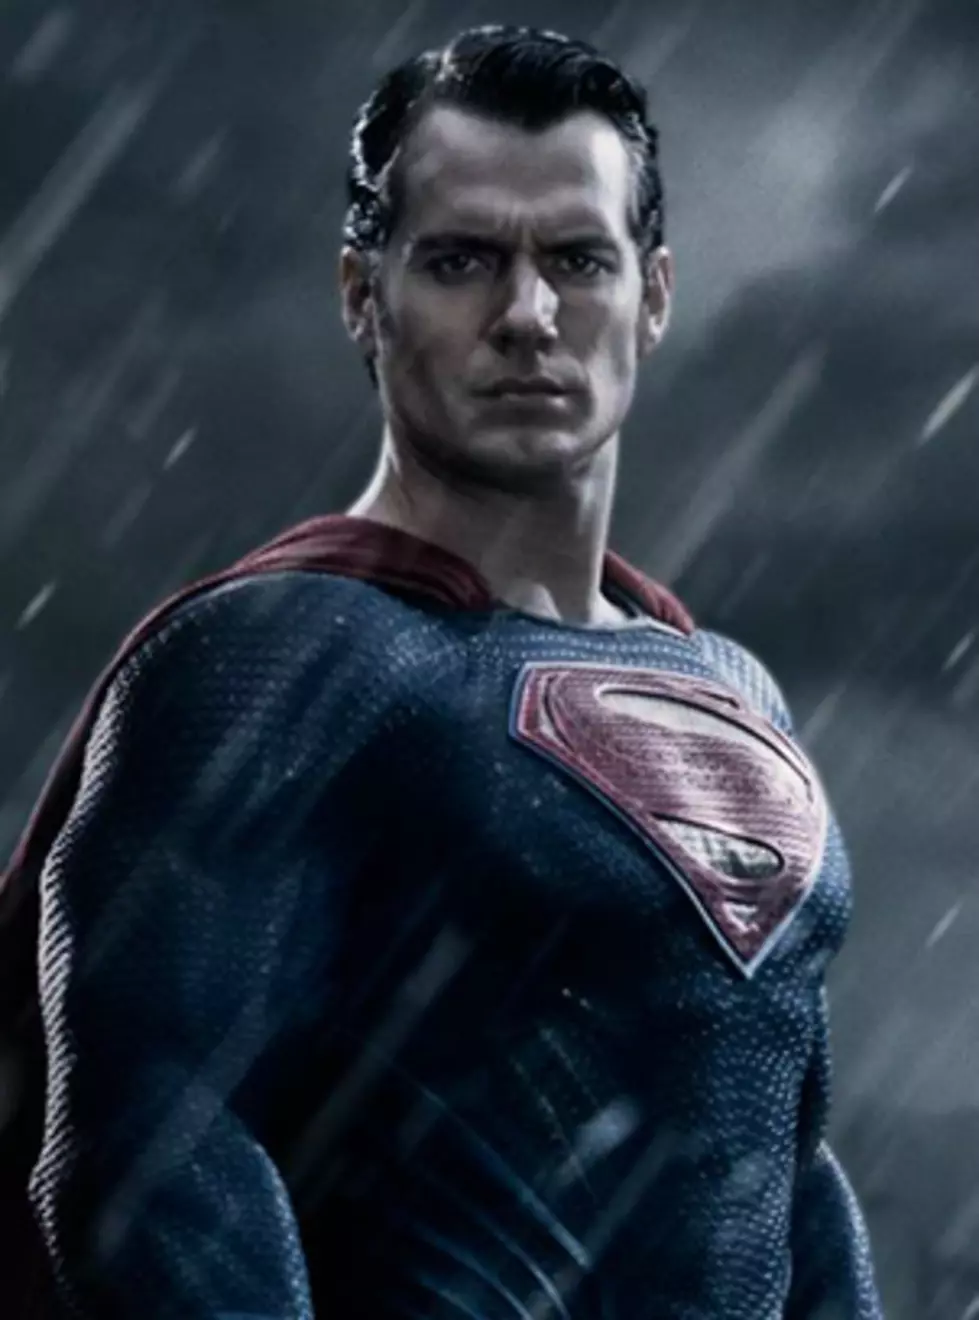 ‘Batman v Superman:’ Lex Luthor’s Mansion at Michigan State University?